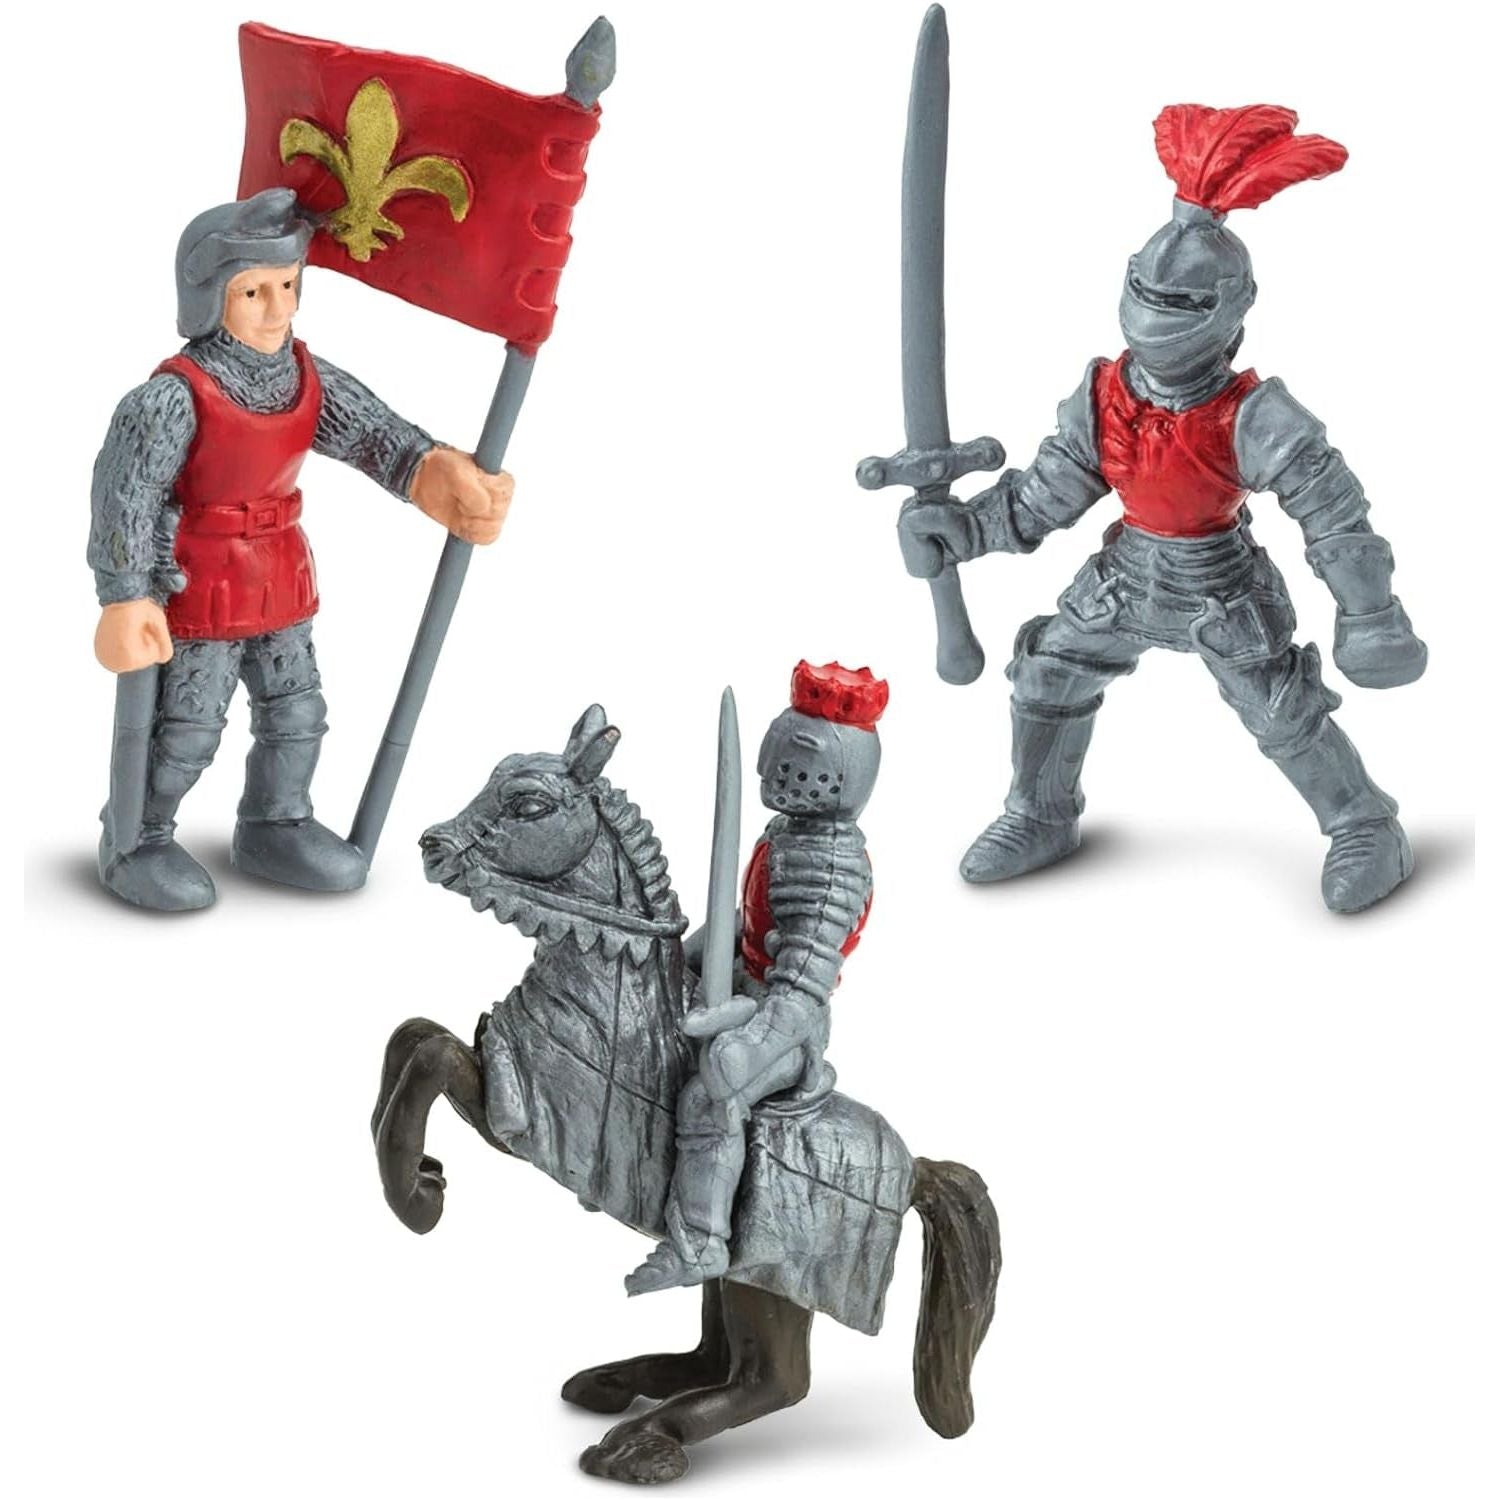 Knights & Dragons Miniature Figures